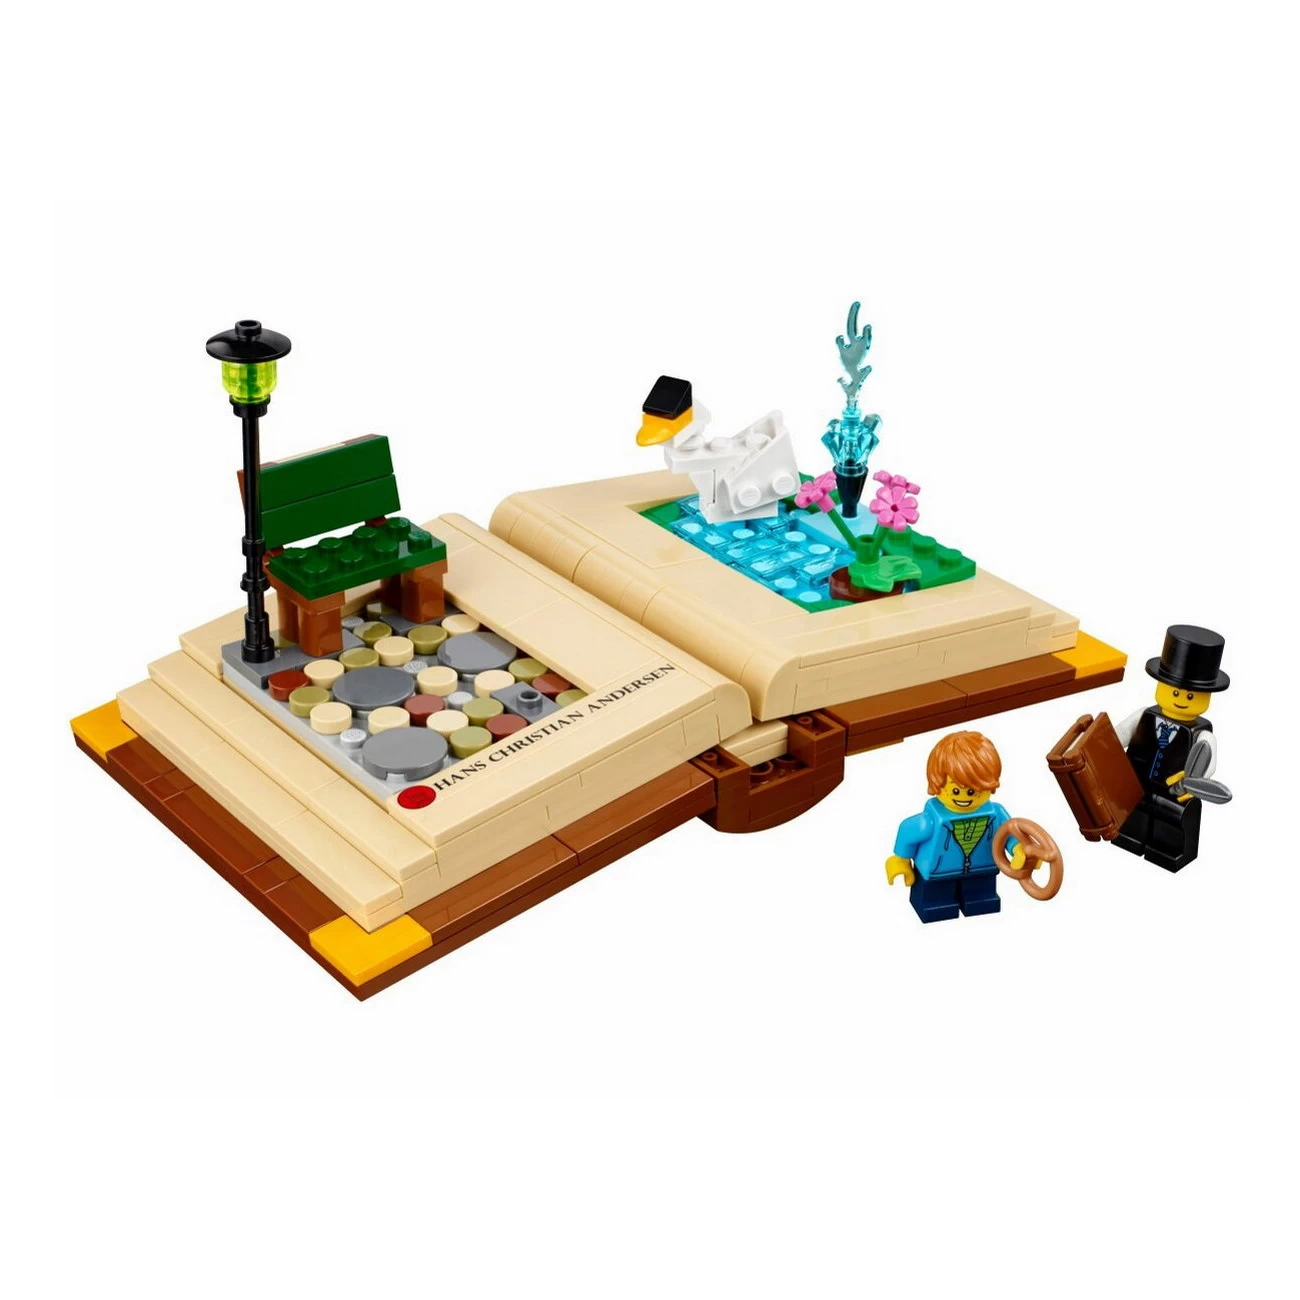 LEGO 40291 - Hans Christian Andersen - Kreatives Bilderbuch